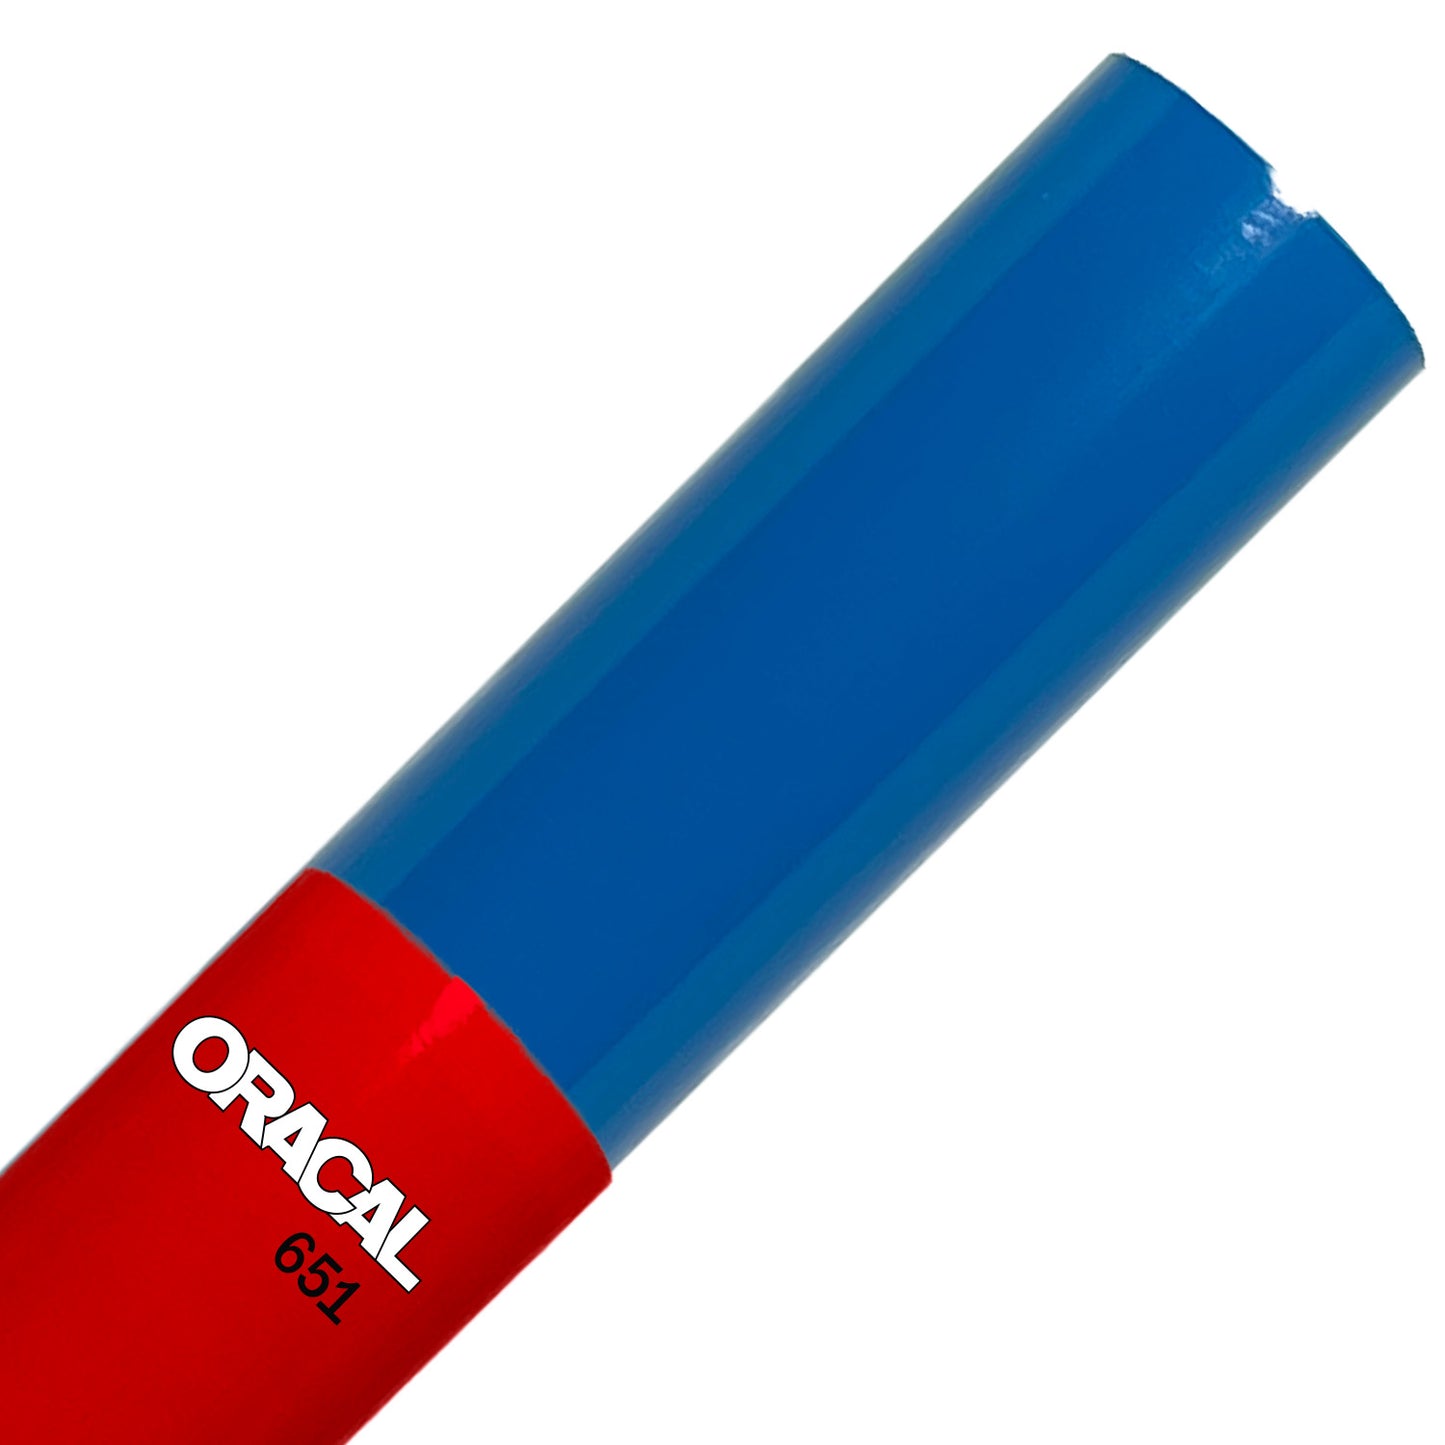 Oracal 651 Glossy Vinyl Rolls - Azure Blue, 12 inch x 6 Foot